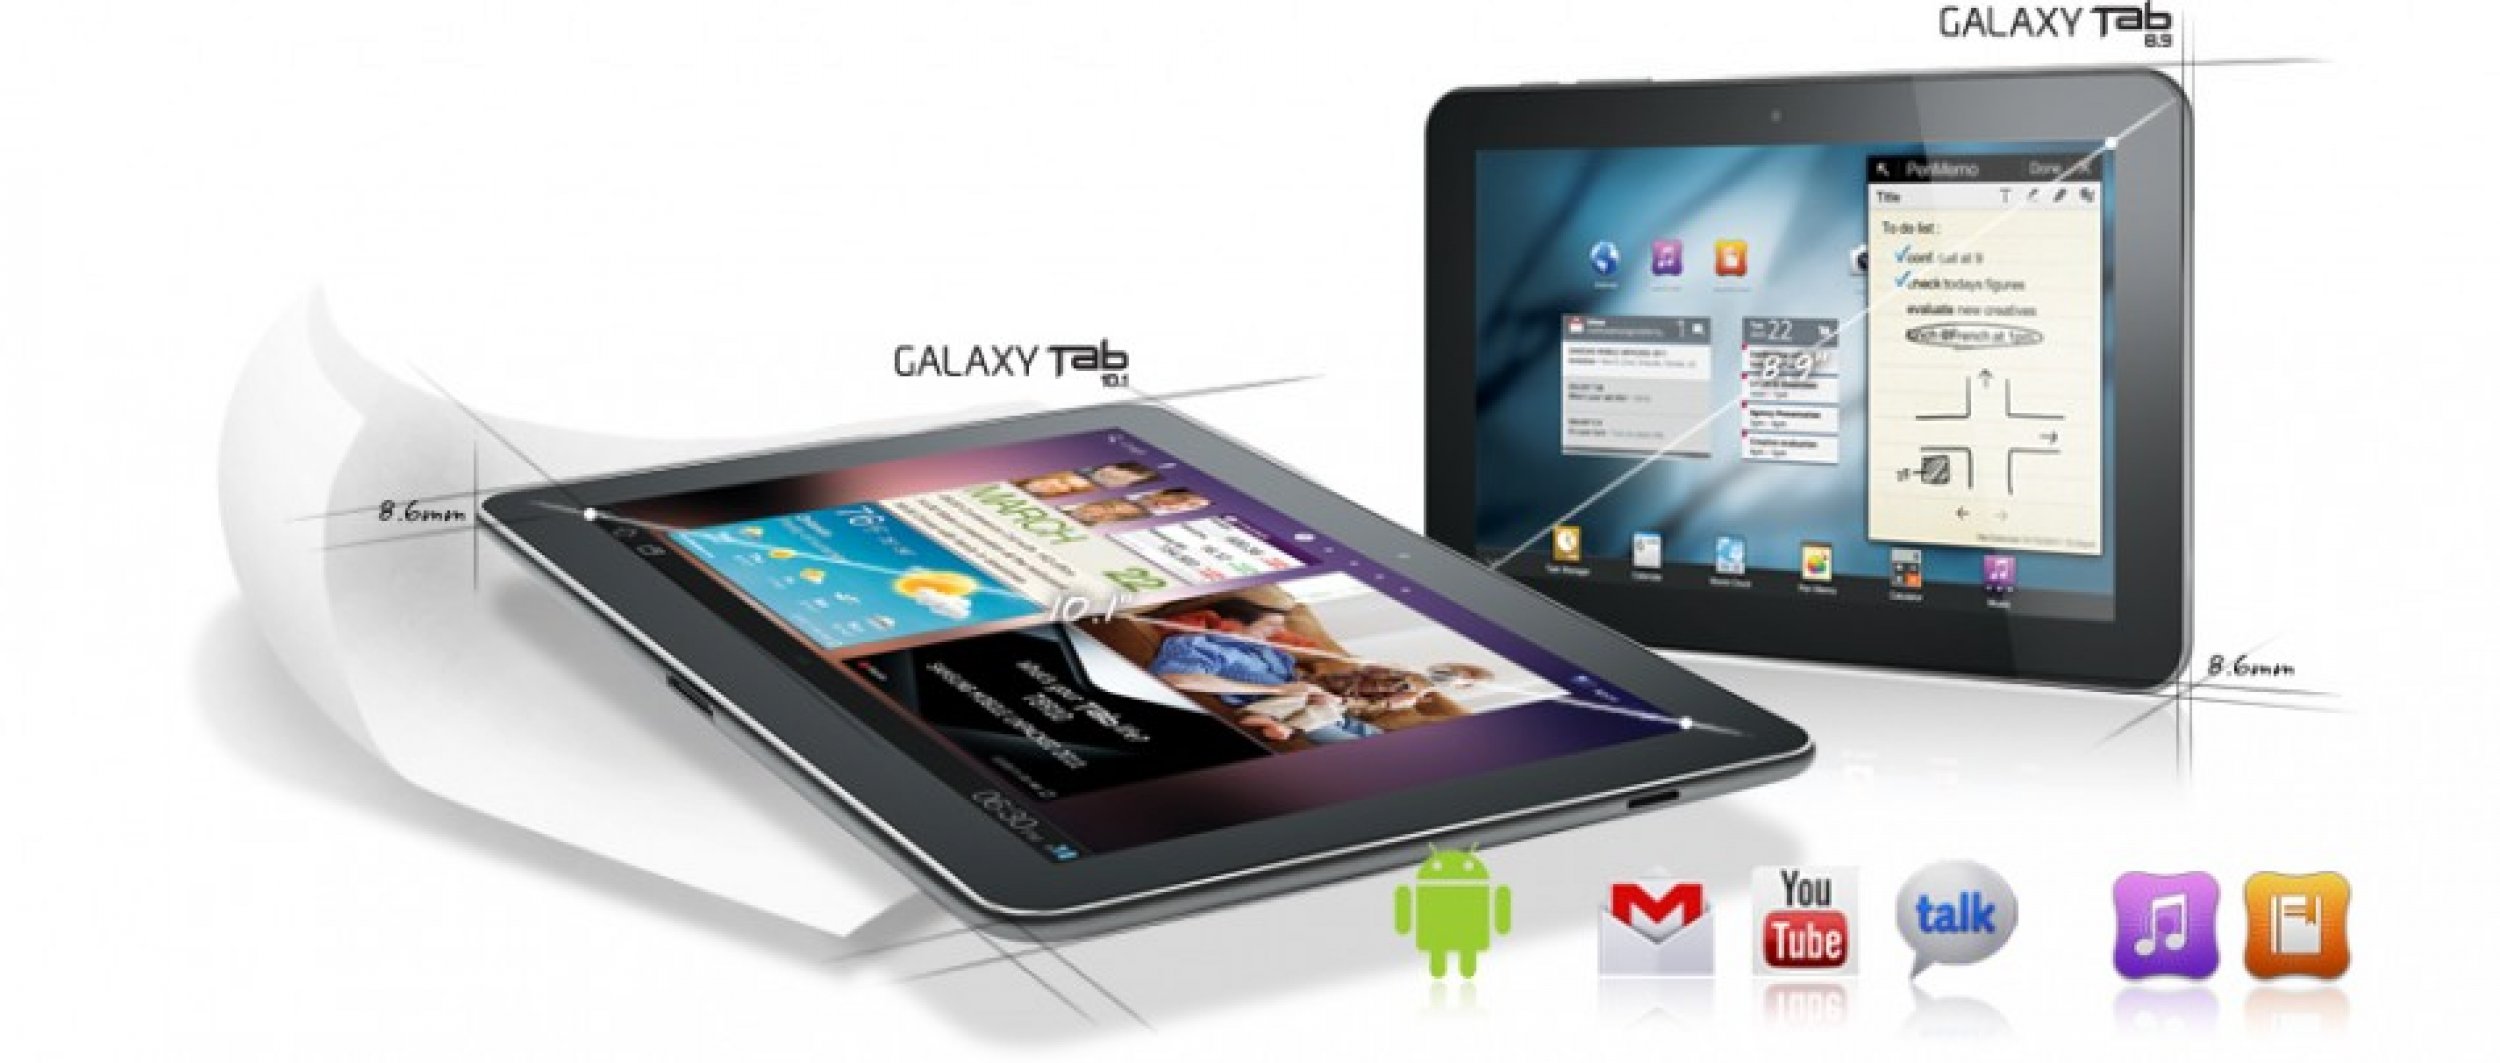 Samsung Galaxy Tab 10.1 and 8.9